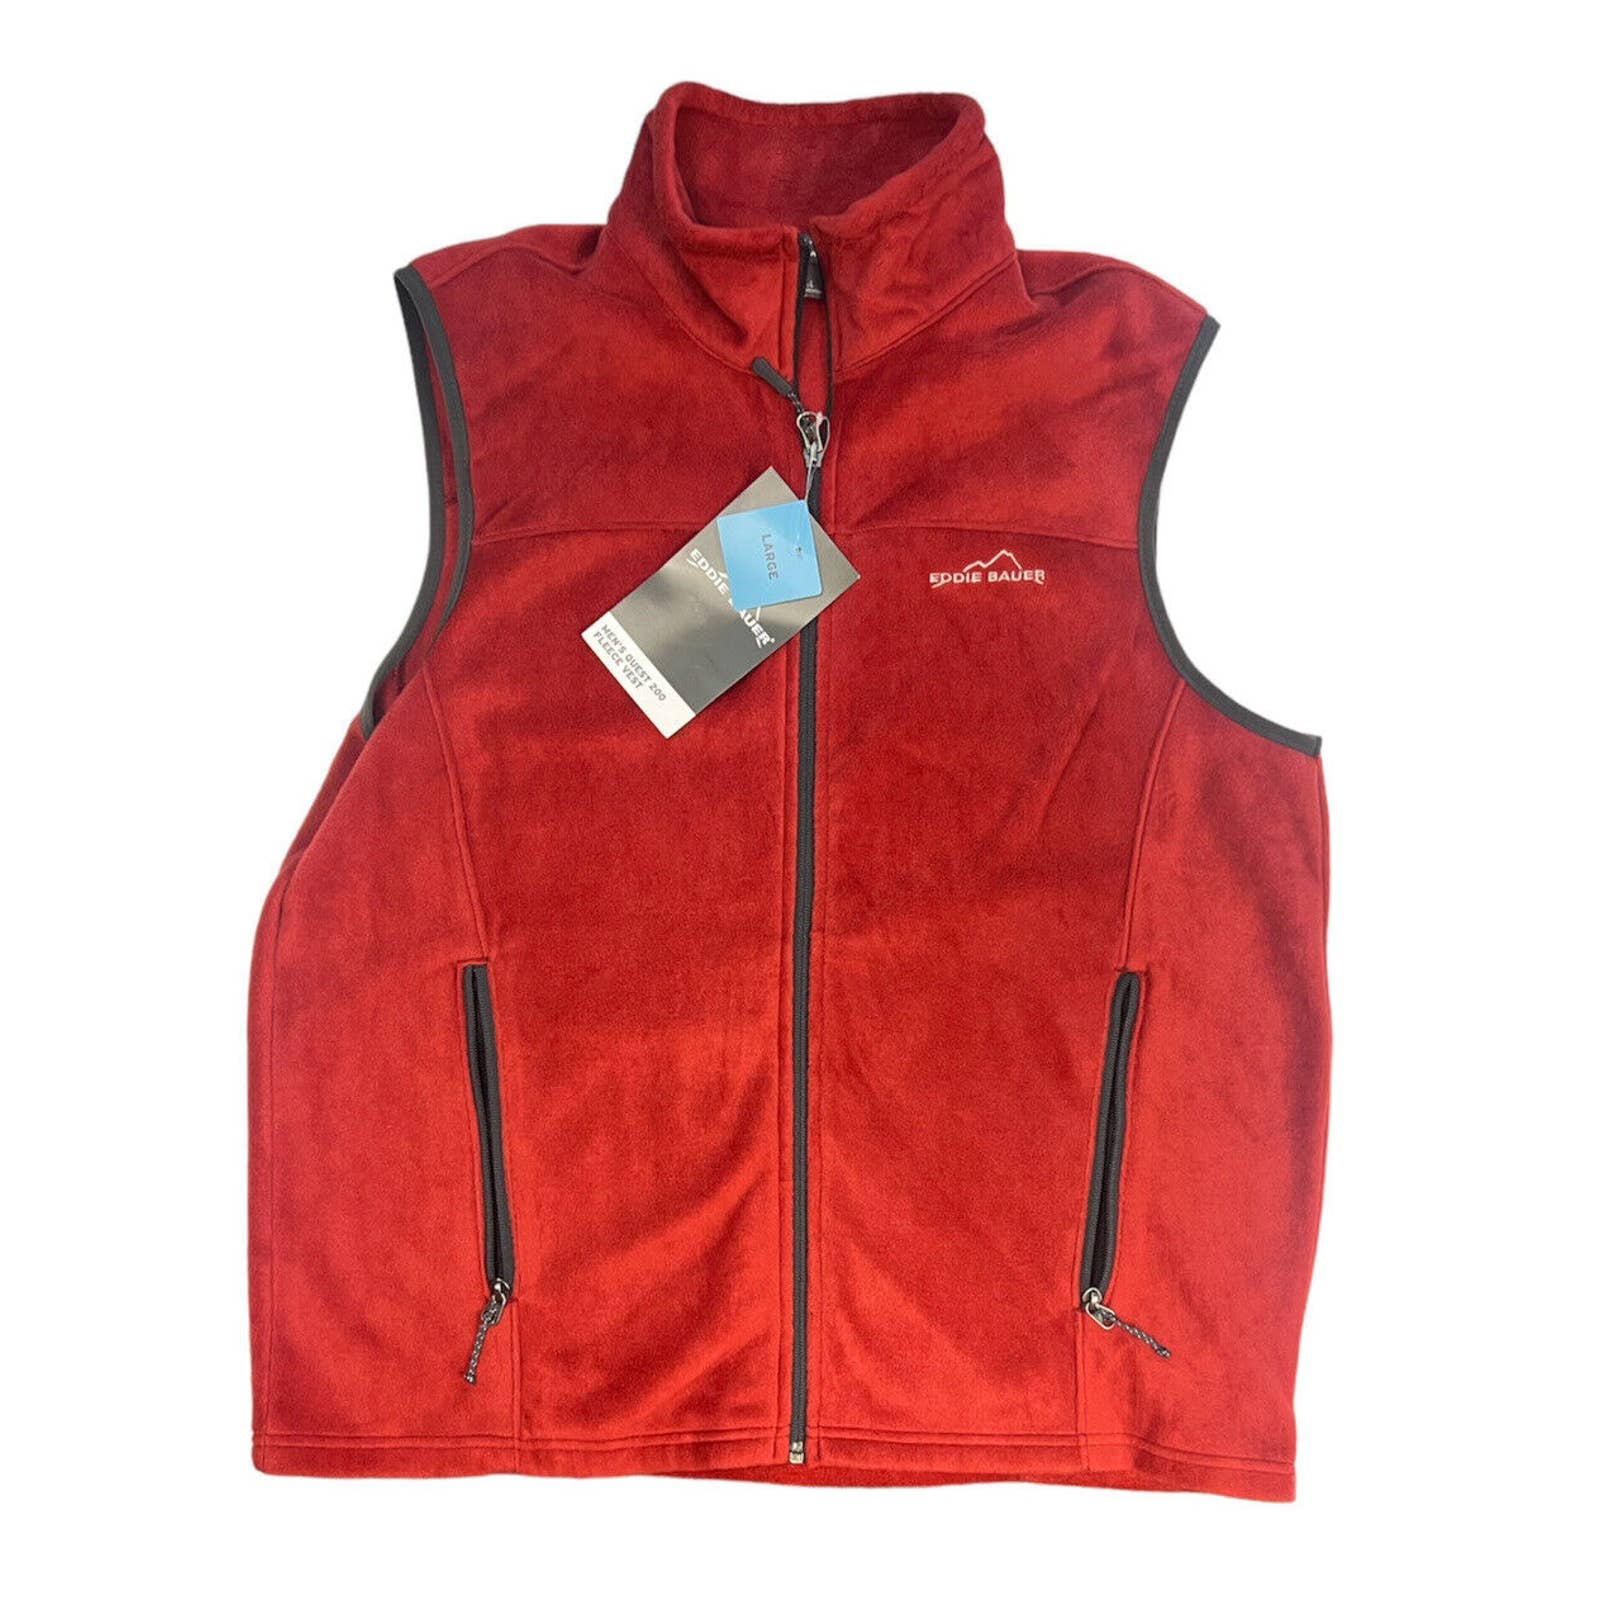 Eddie Bauer Quest 200 Fleece Vest Men’s Large Brick Red Color Polyester